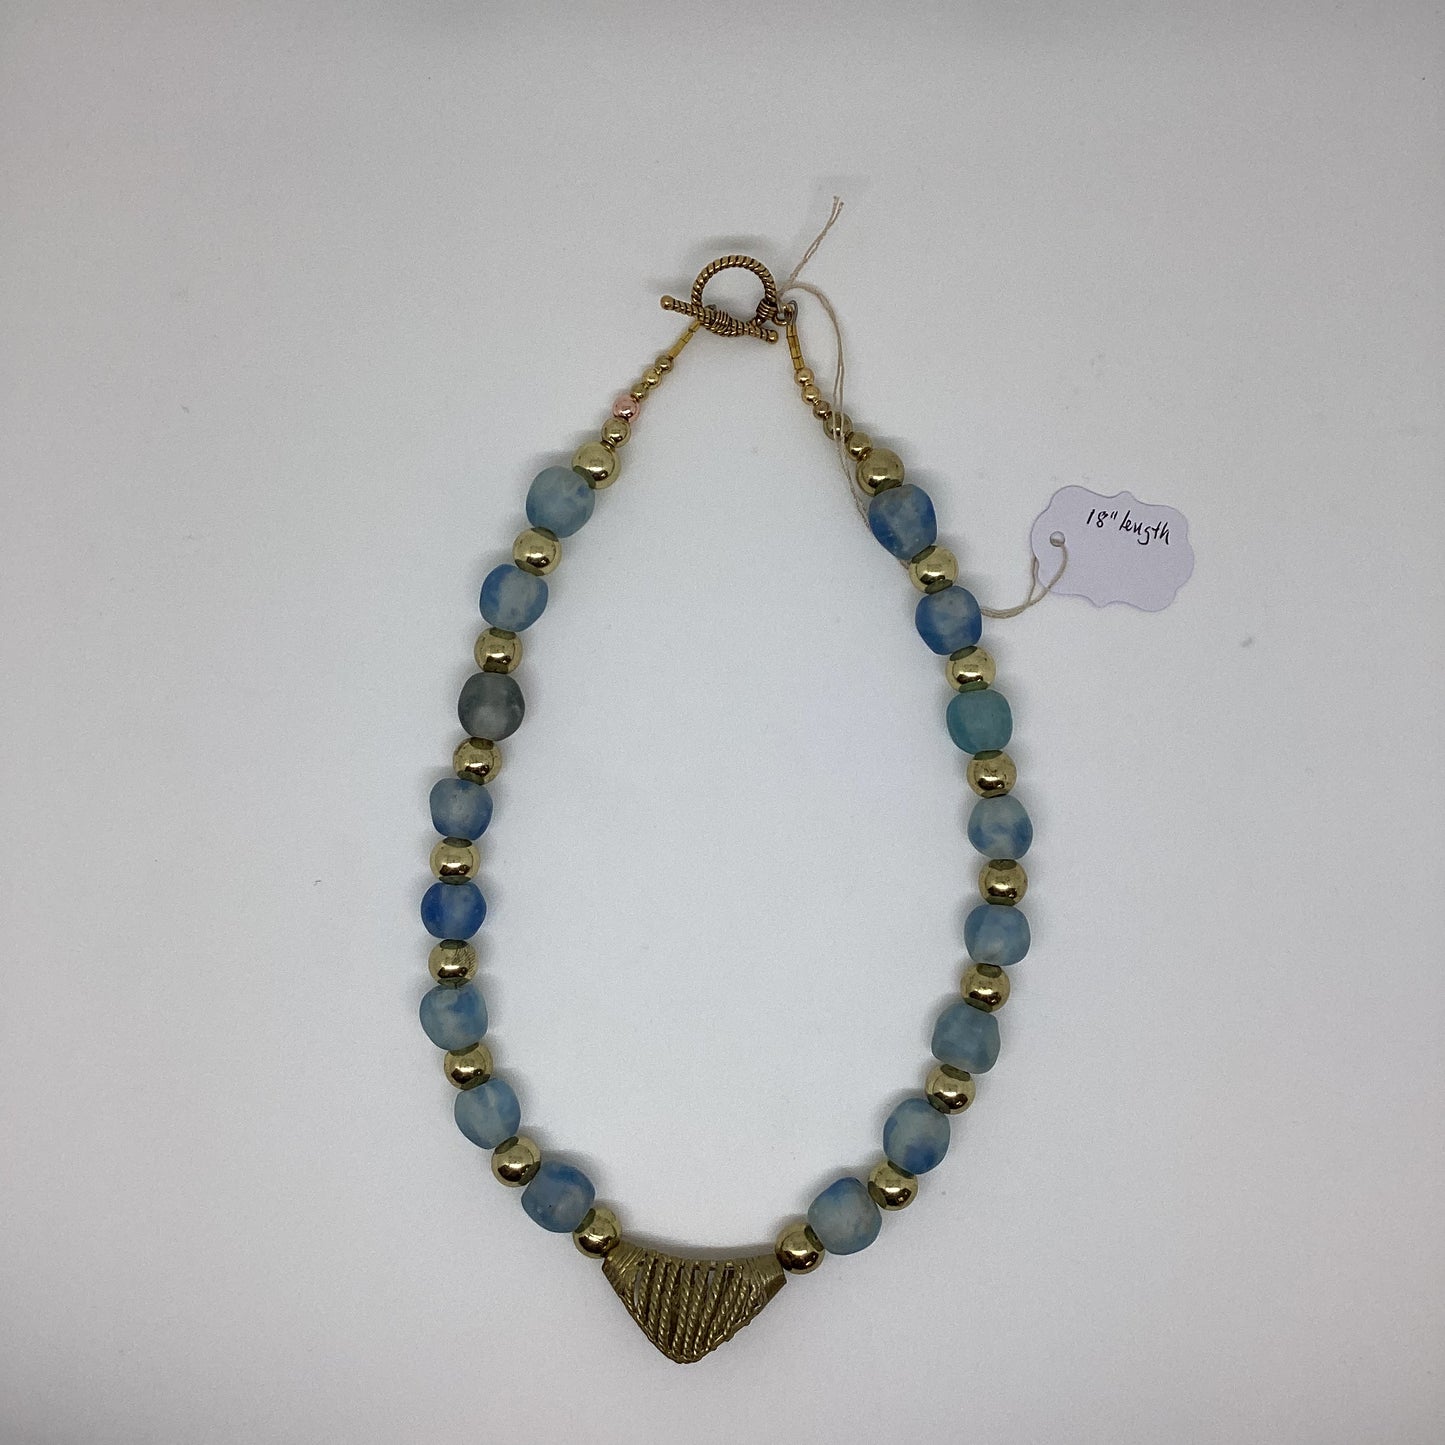 Translucent blue necklace